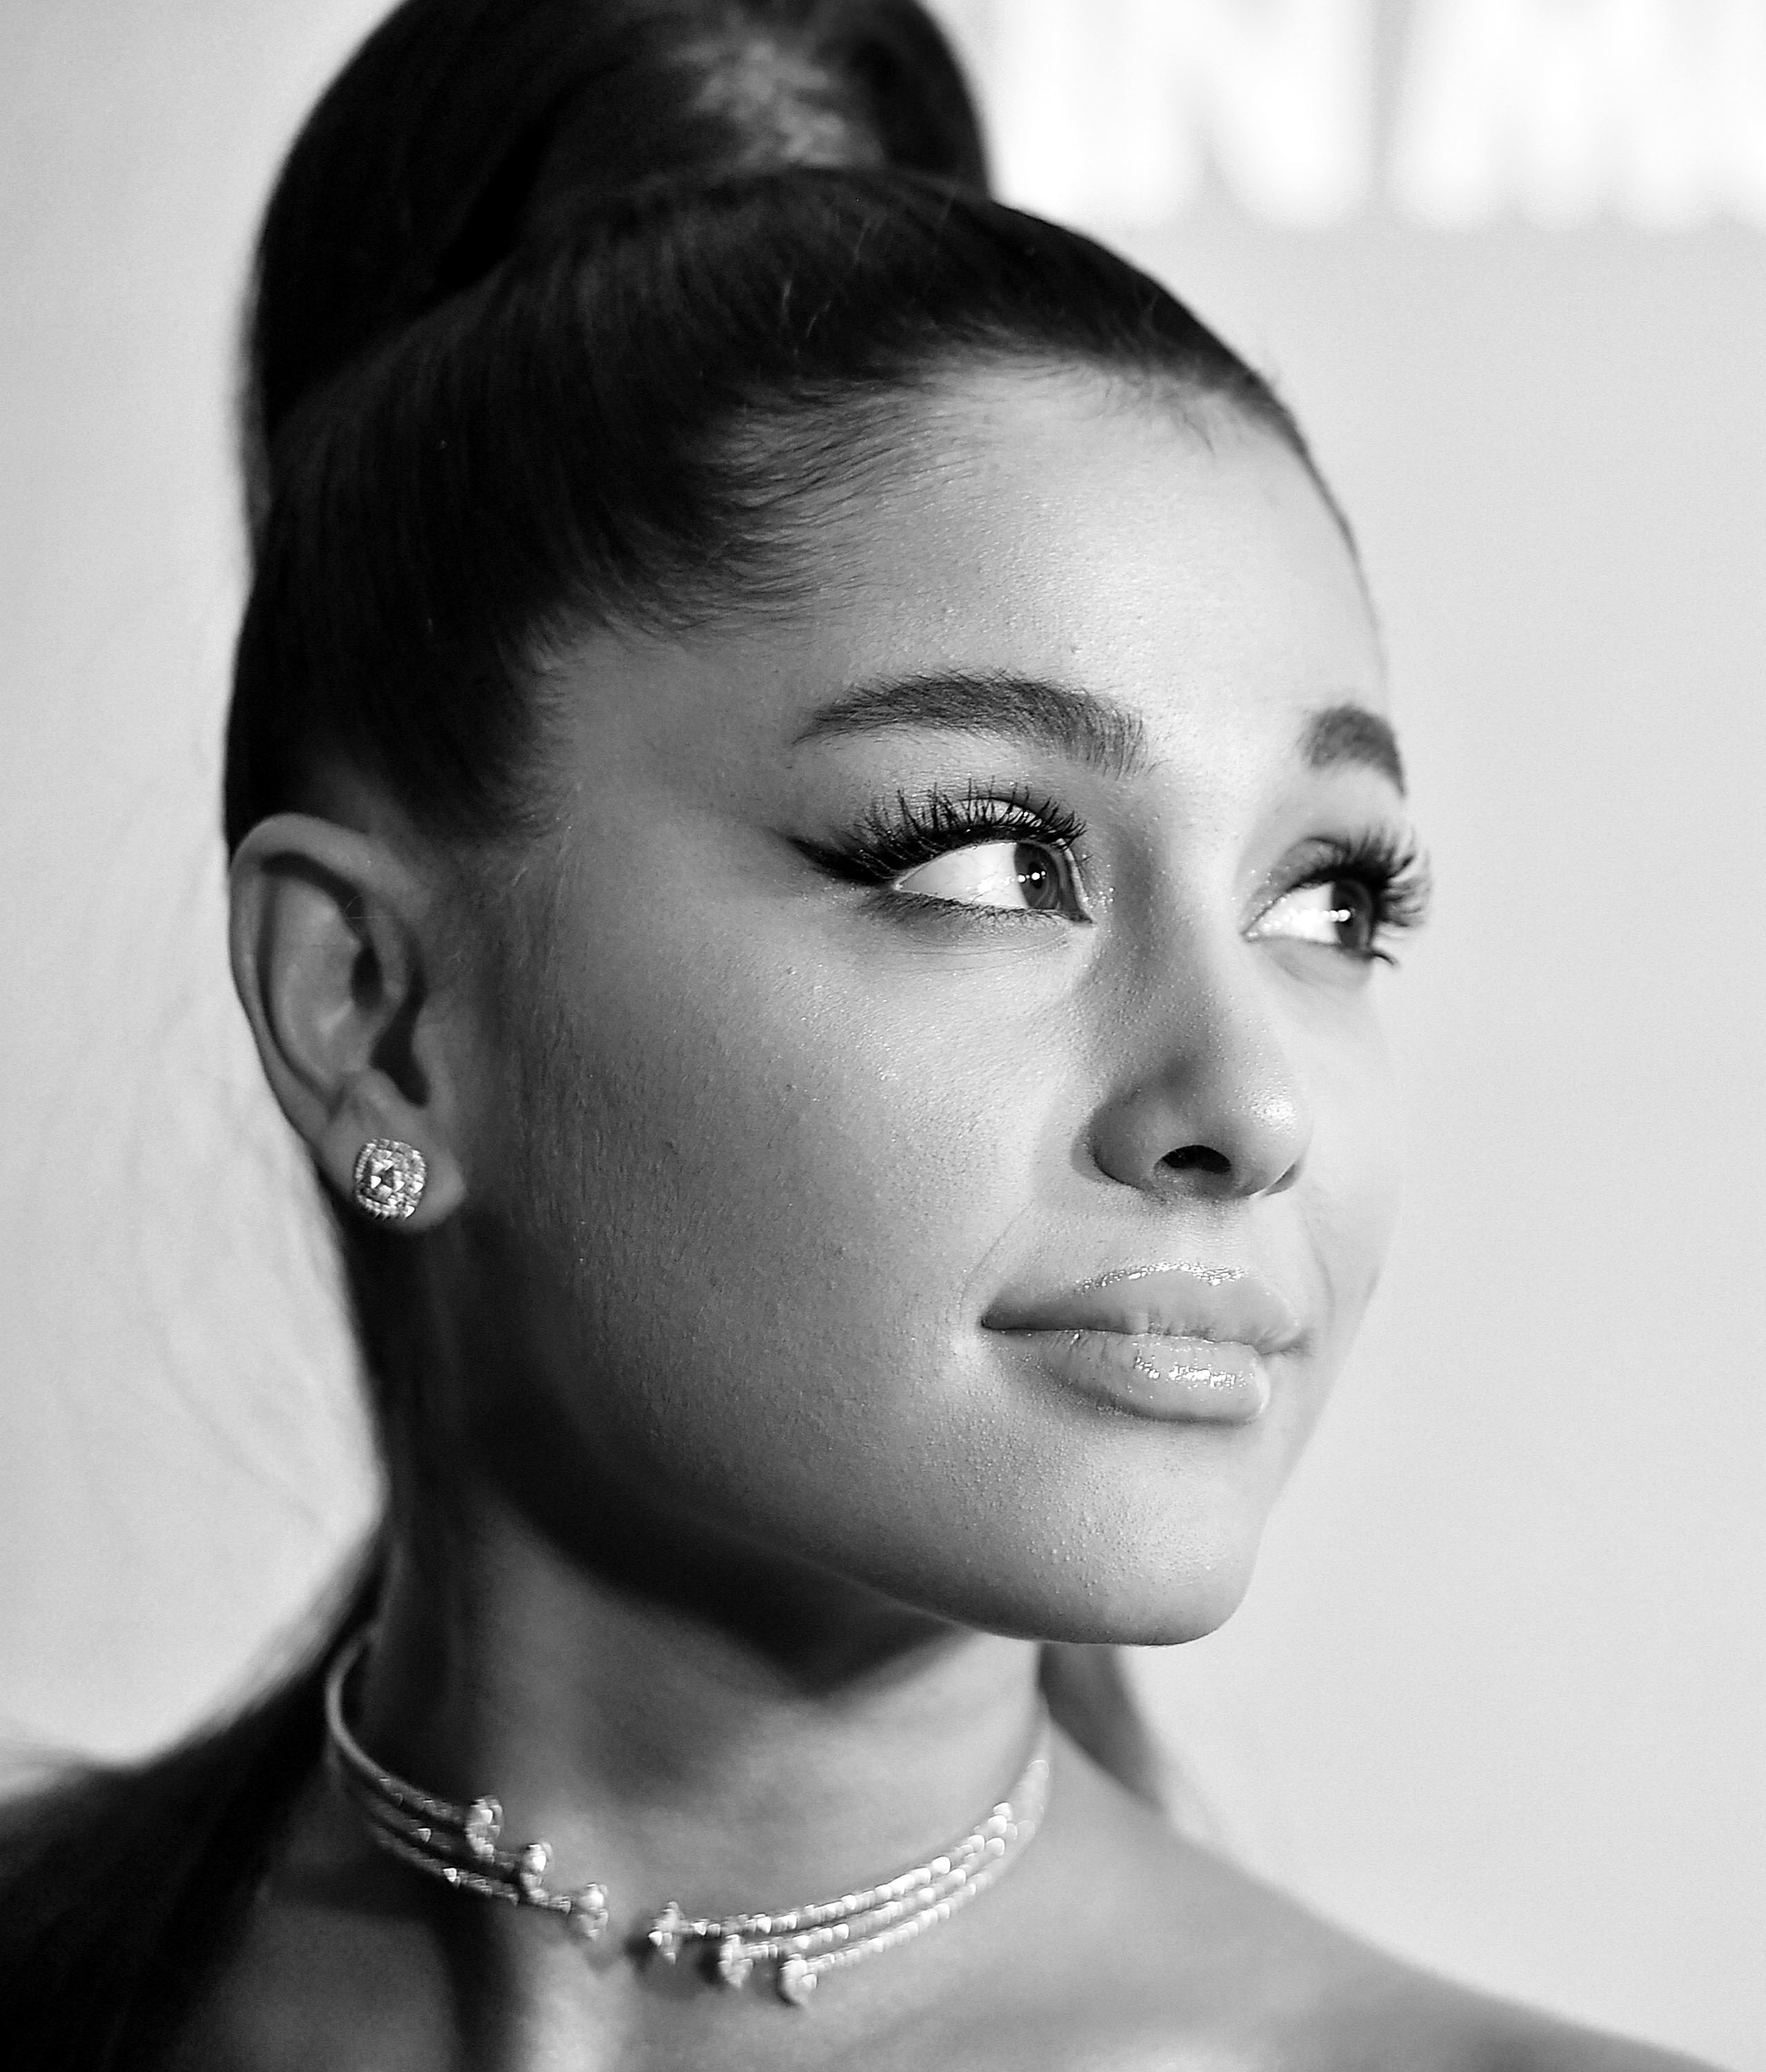 Ariana Grande Defends Naming Song 'Pete' on 'Sweetener' Album